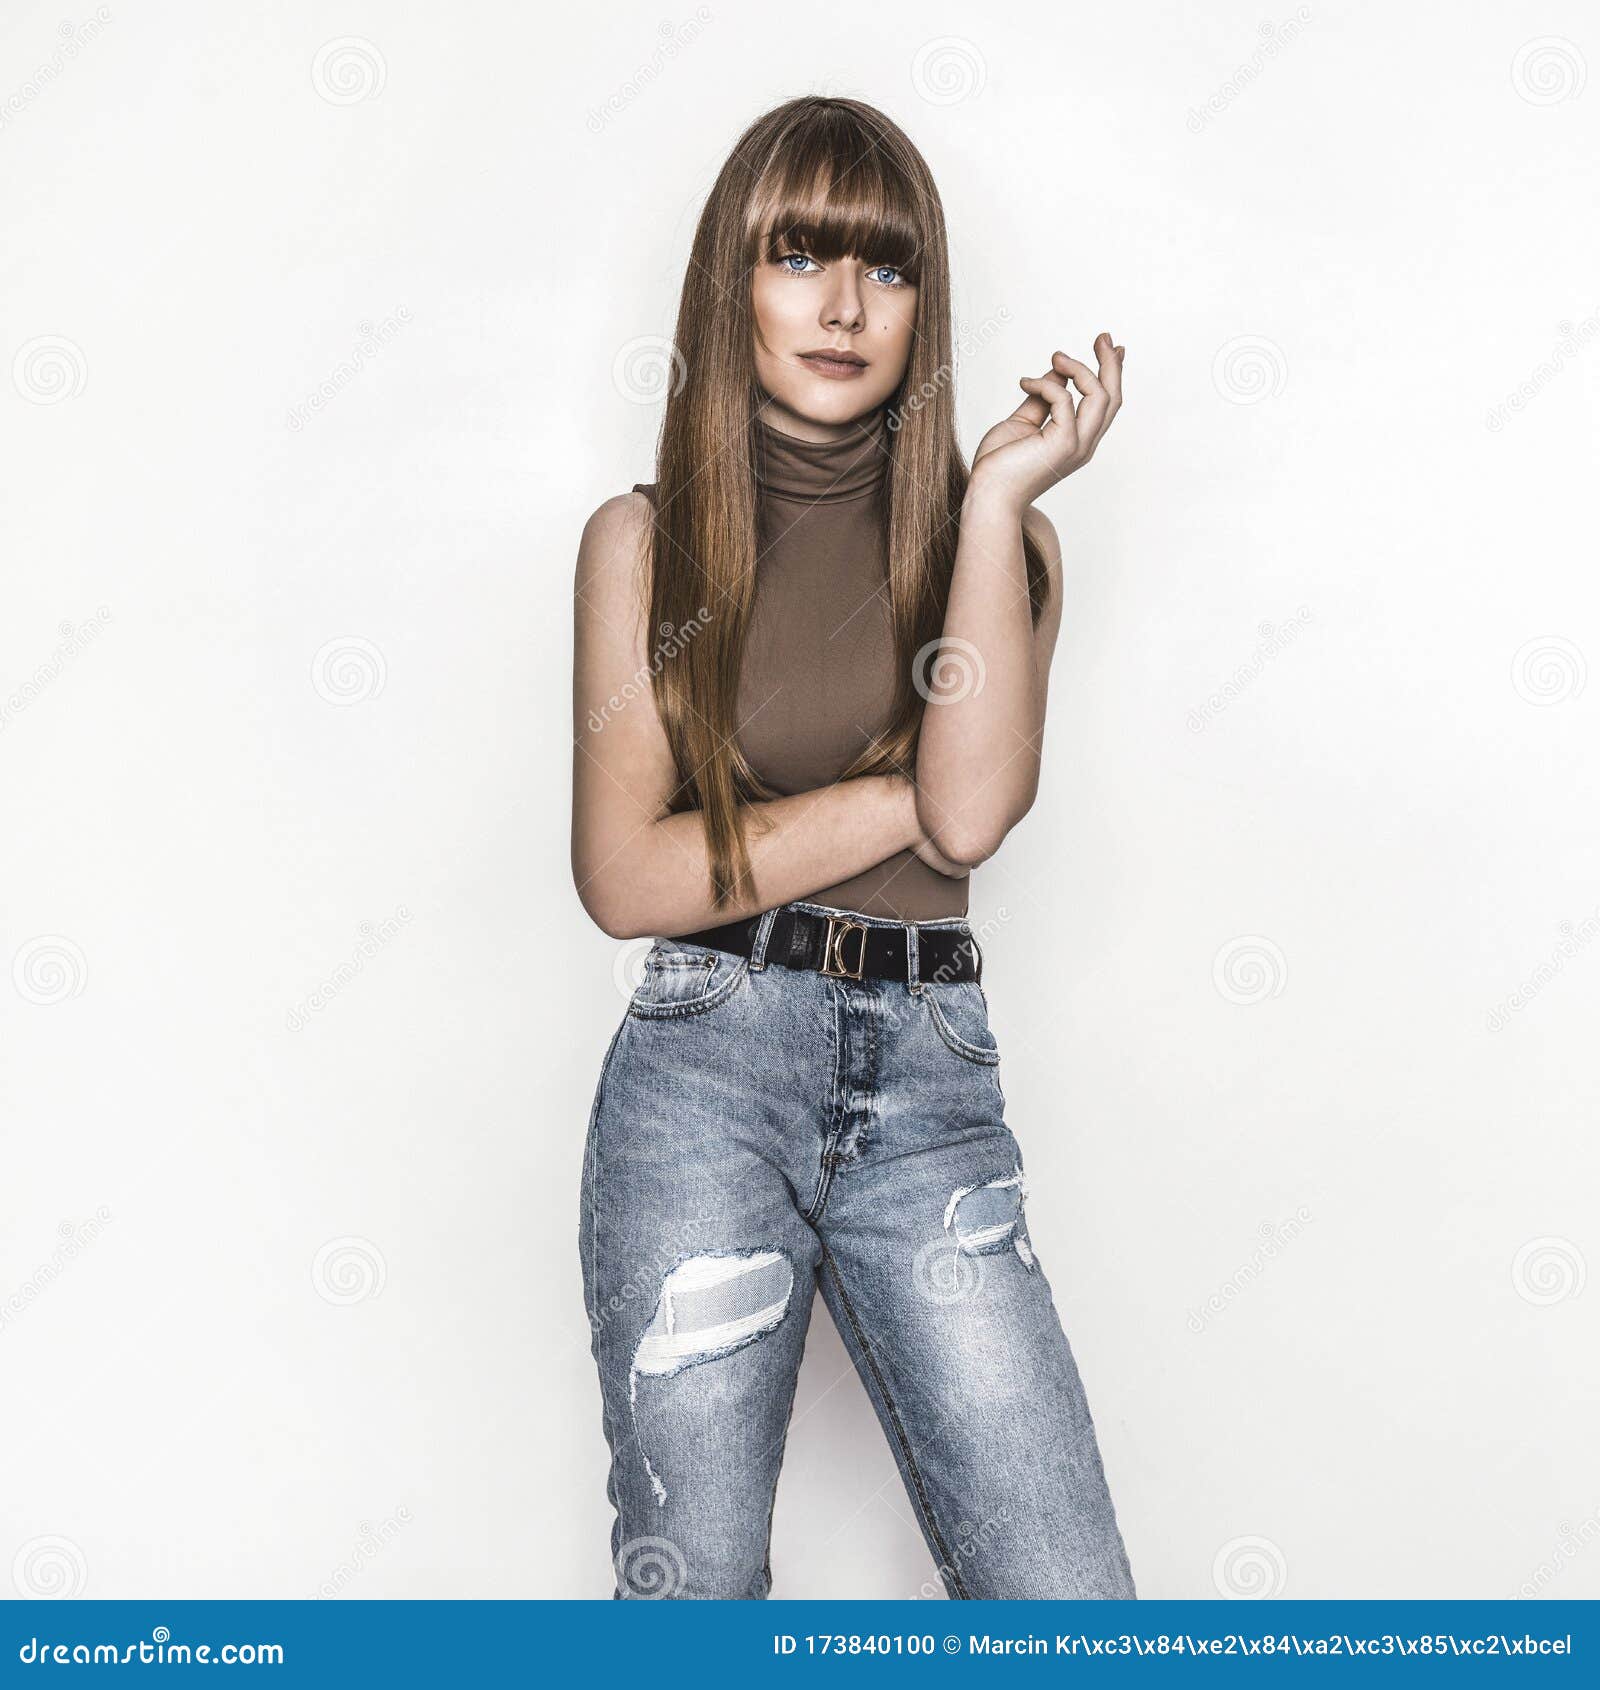 Stylish Baby Girl Sunglasses Haircut Jeans Stock Photo 711203014 |  Shutterstock